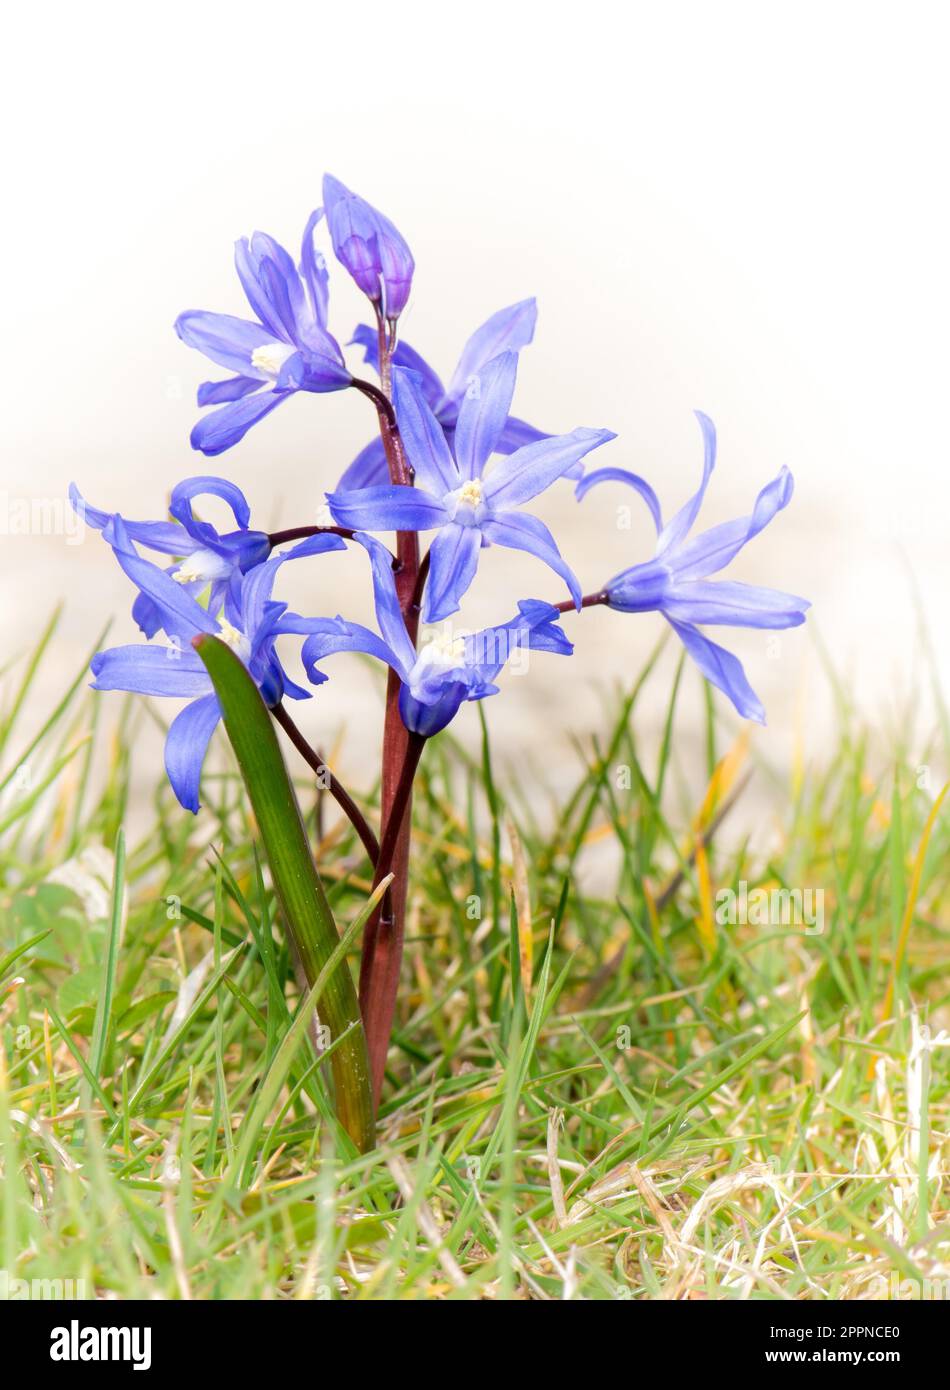 Macro of a blue Scilla flower (Chionodoxa luciliae) in the grass Stock Photo